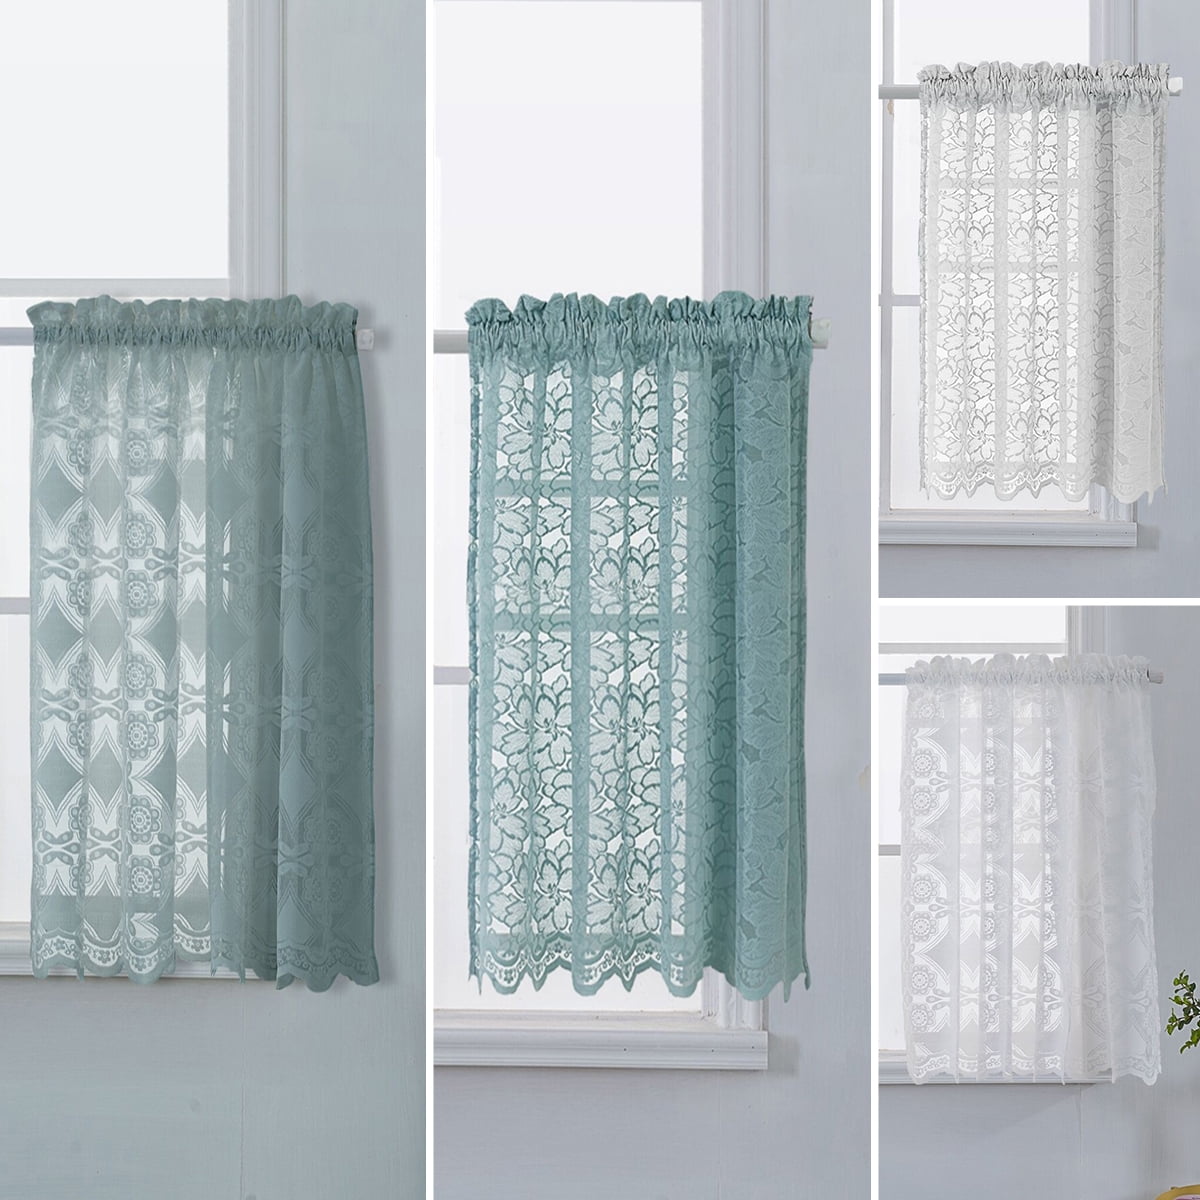 Net Lace Curtain Window Door set White with Pelmet Valance and Tiebacks 